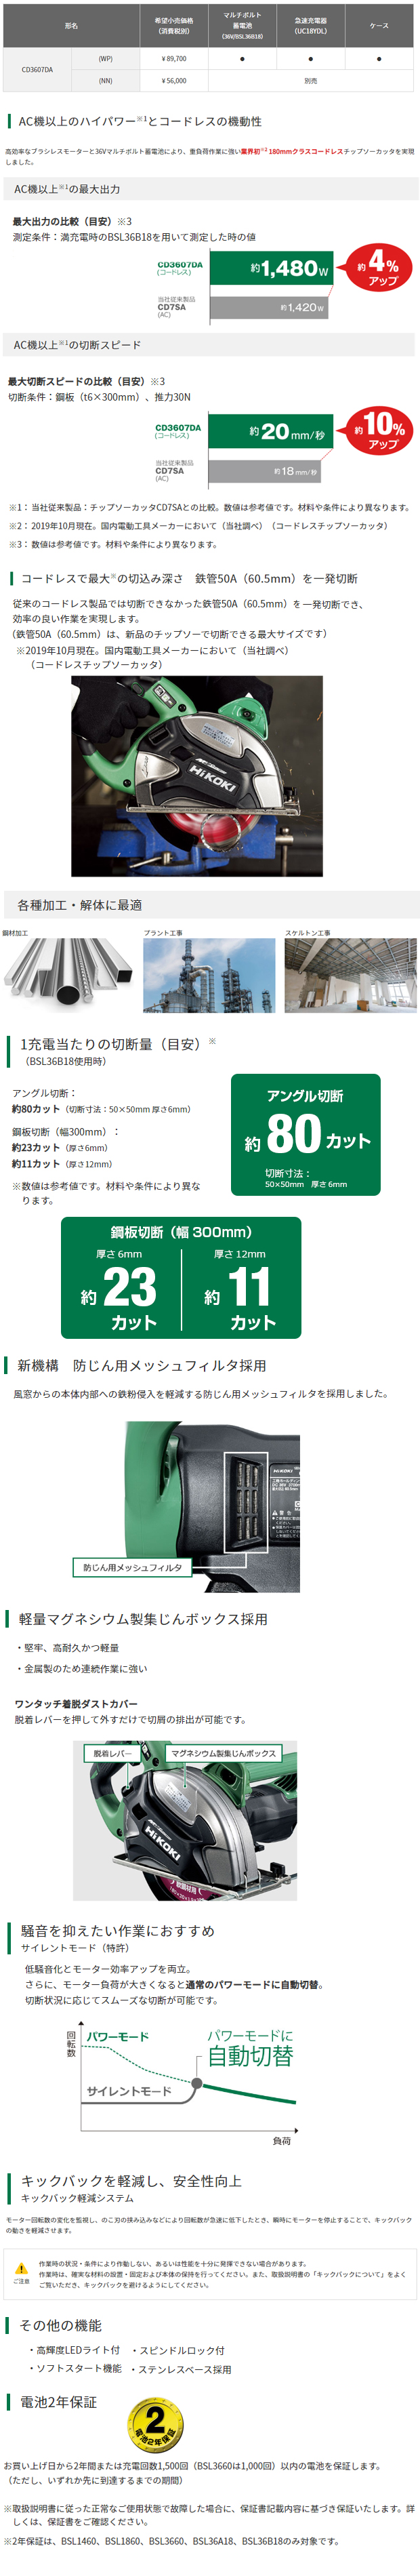 HiKOKI マルチボルト コードレスチップソー CD3607DA